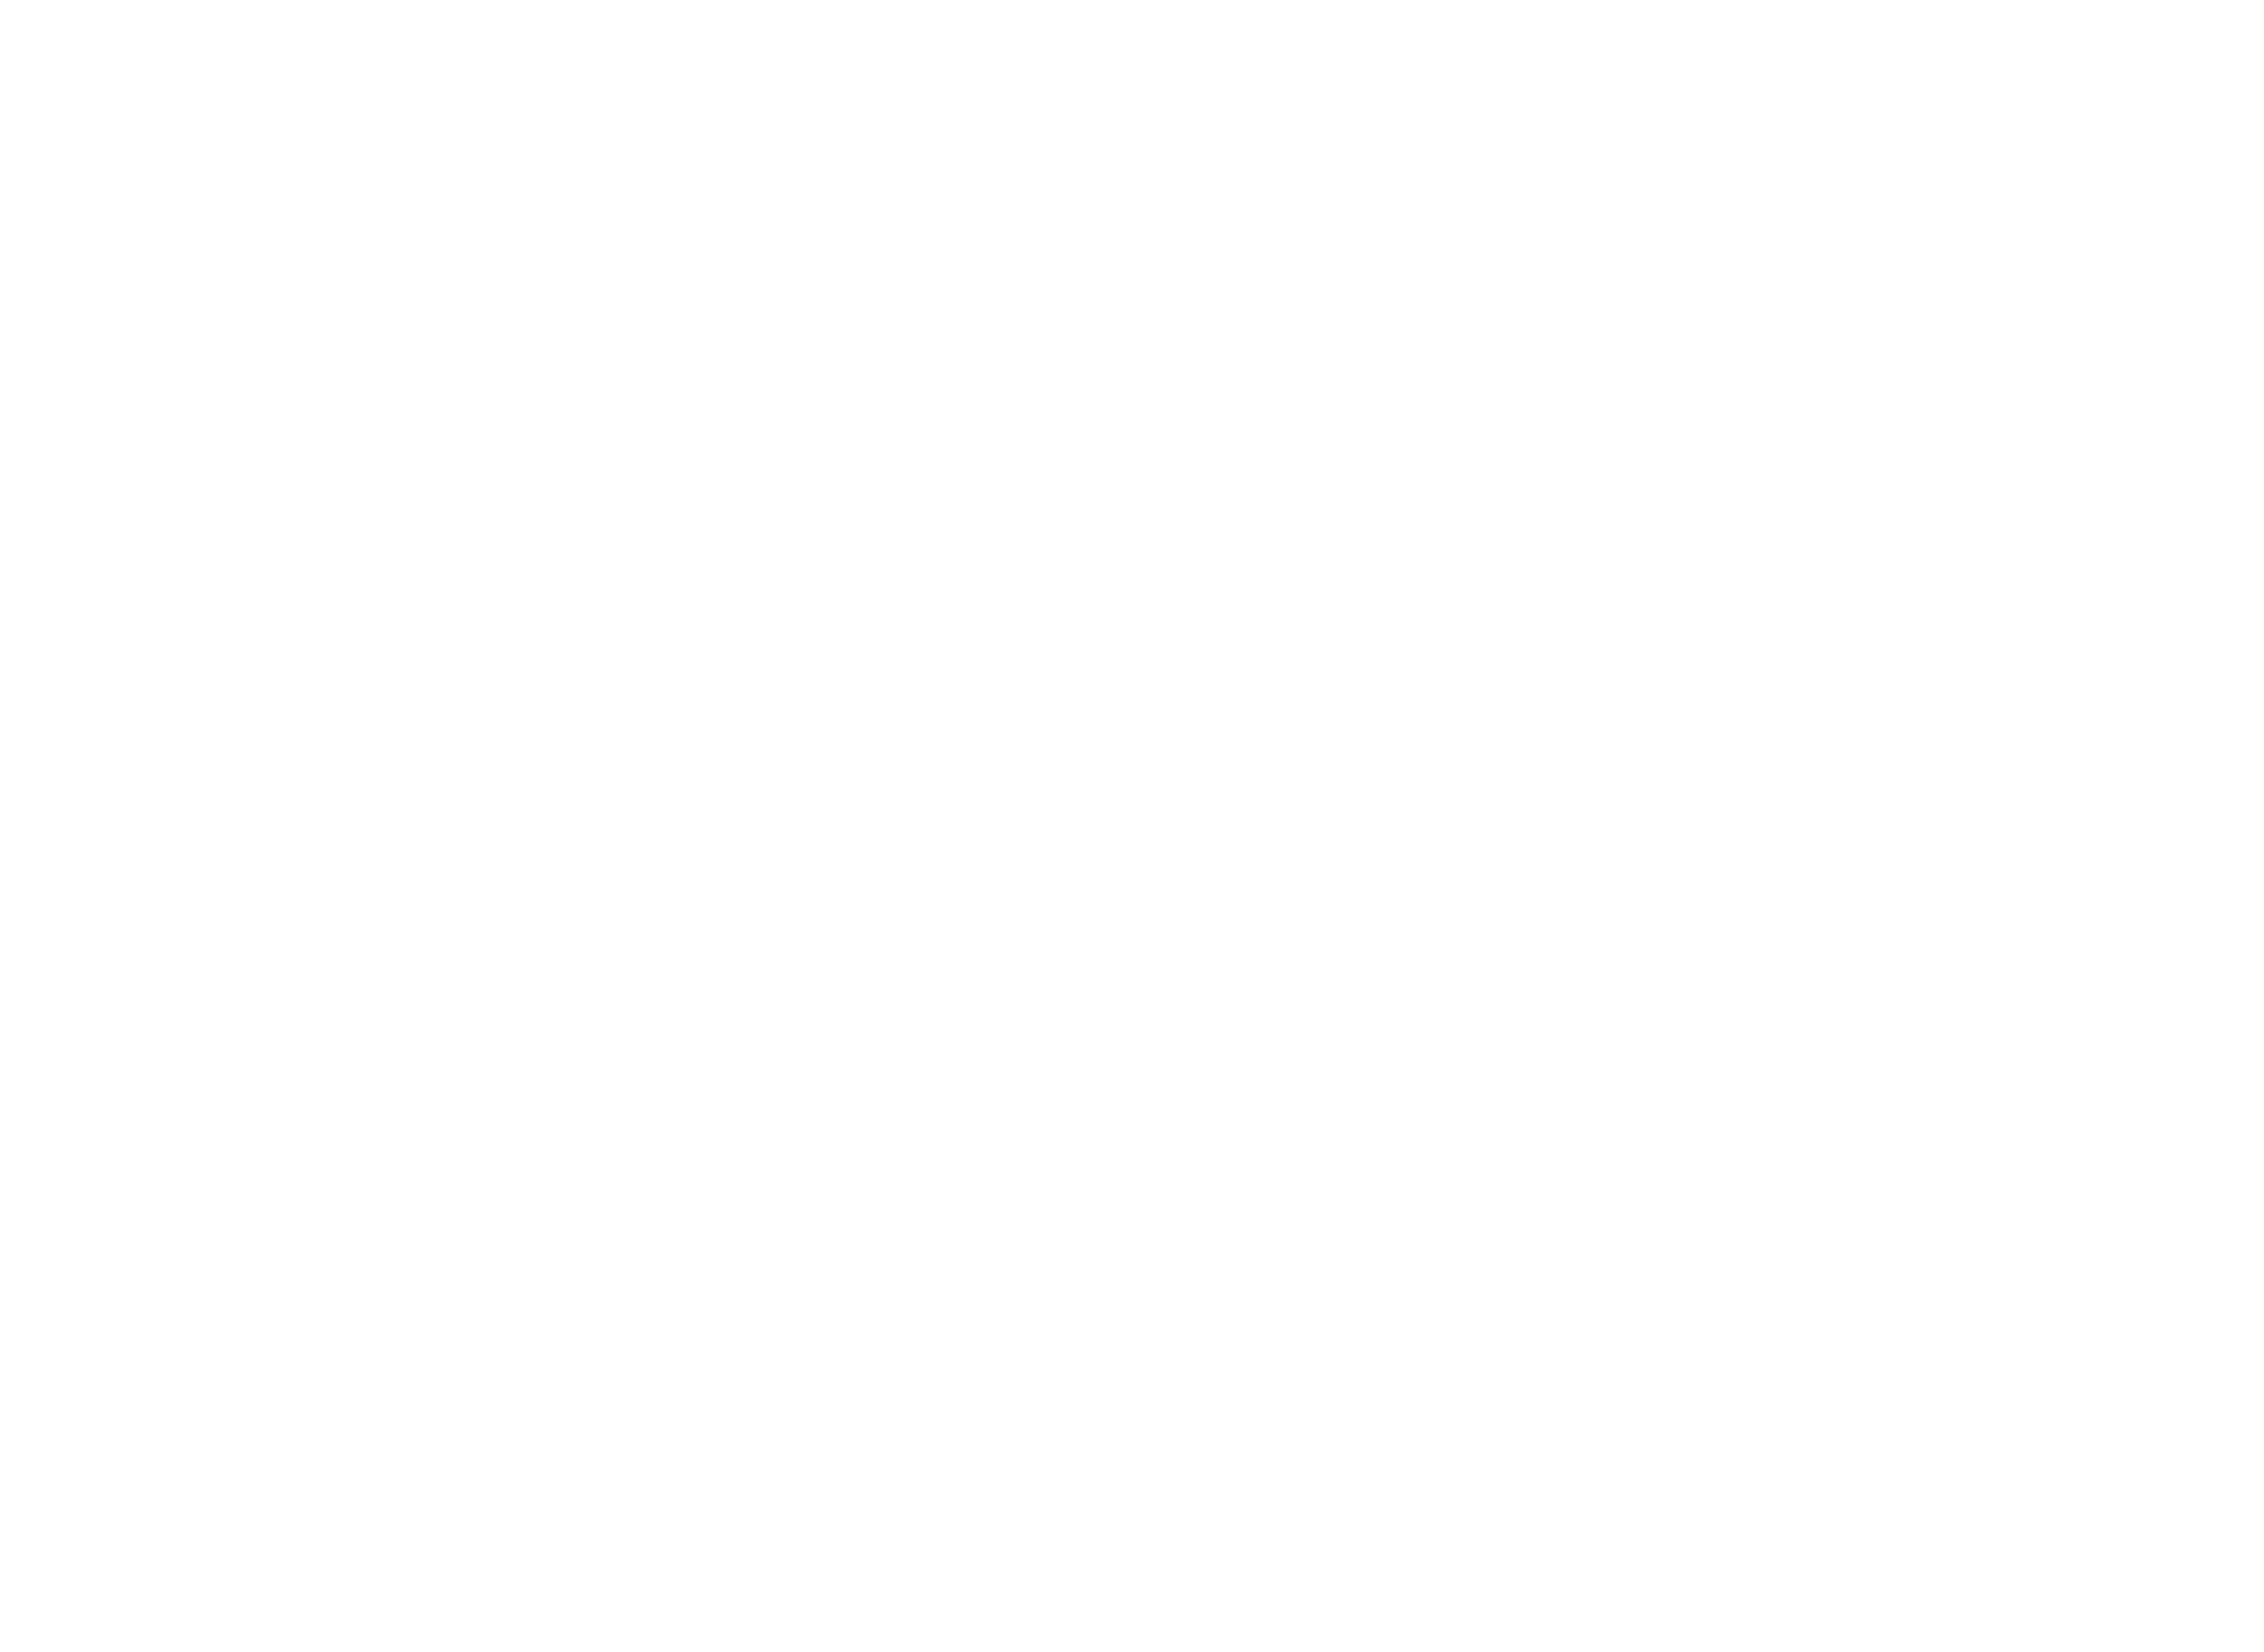 Hail Varsity Club, Sports Bar & Restaurant in La Vista, Nebraska serving southwest Omaha.